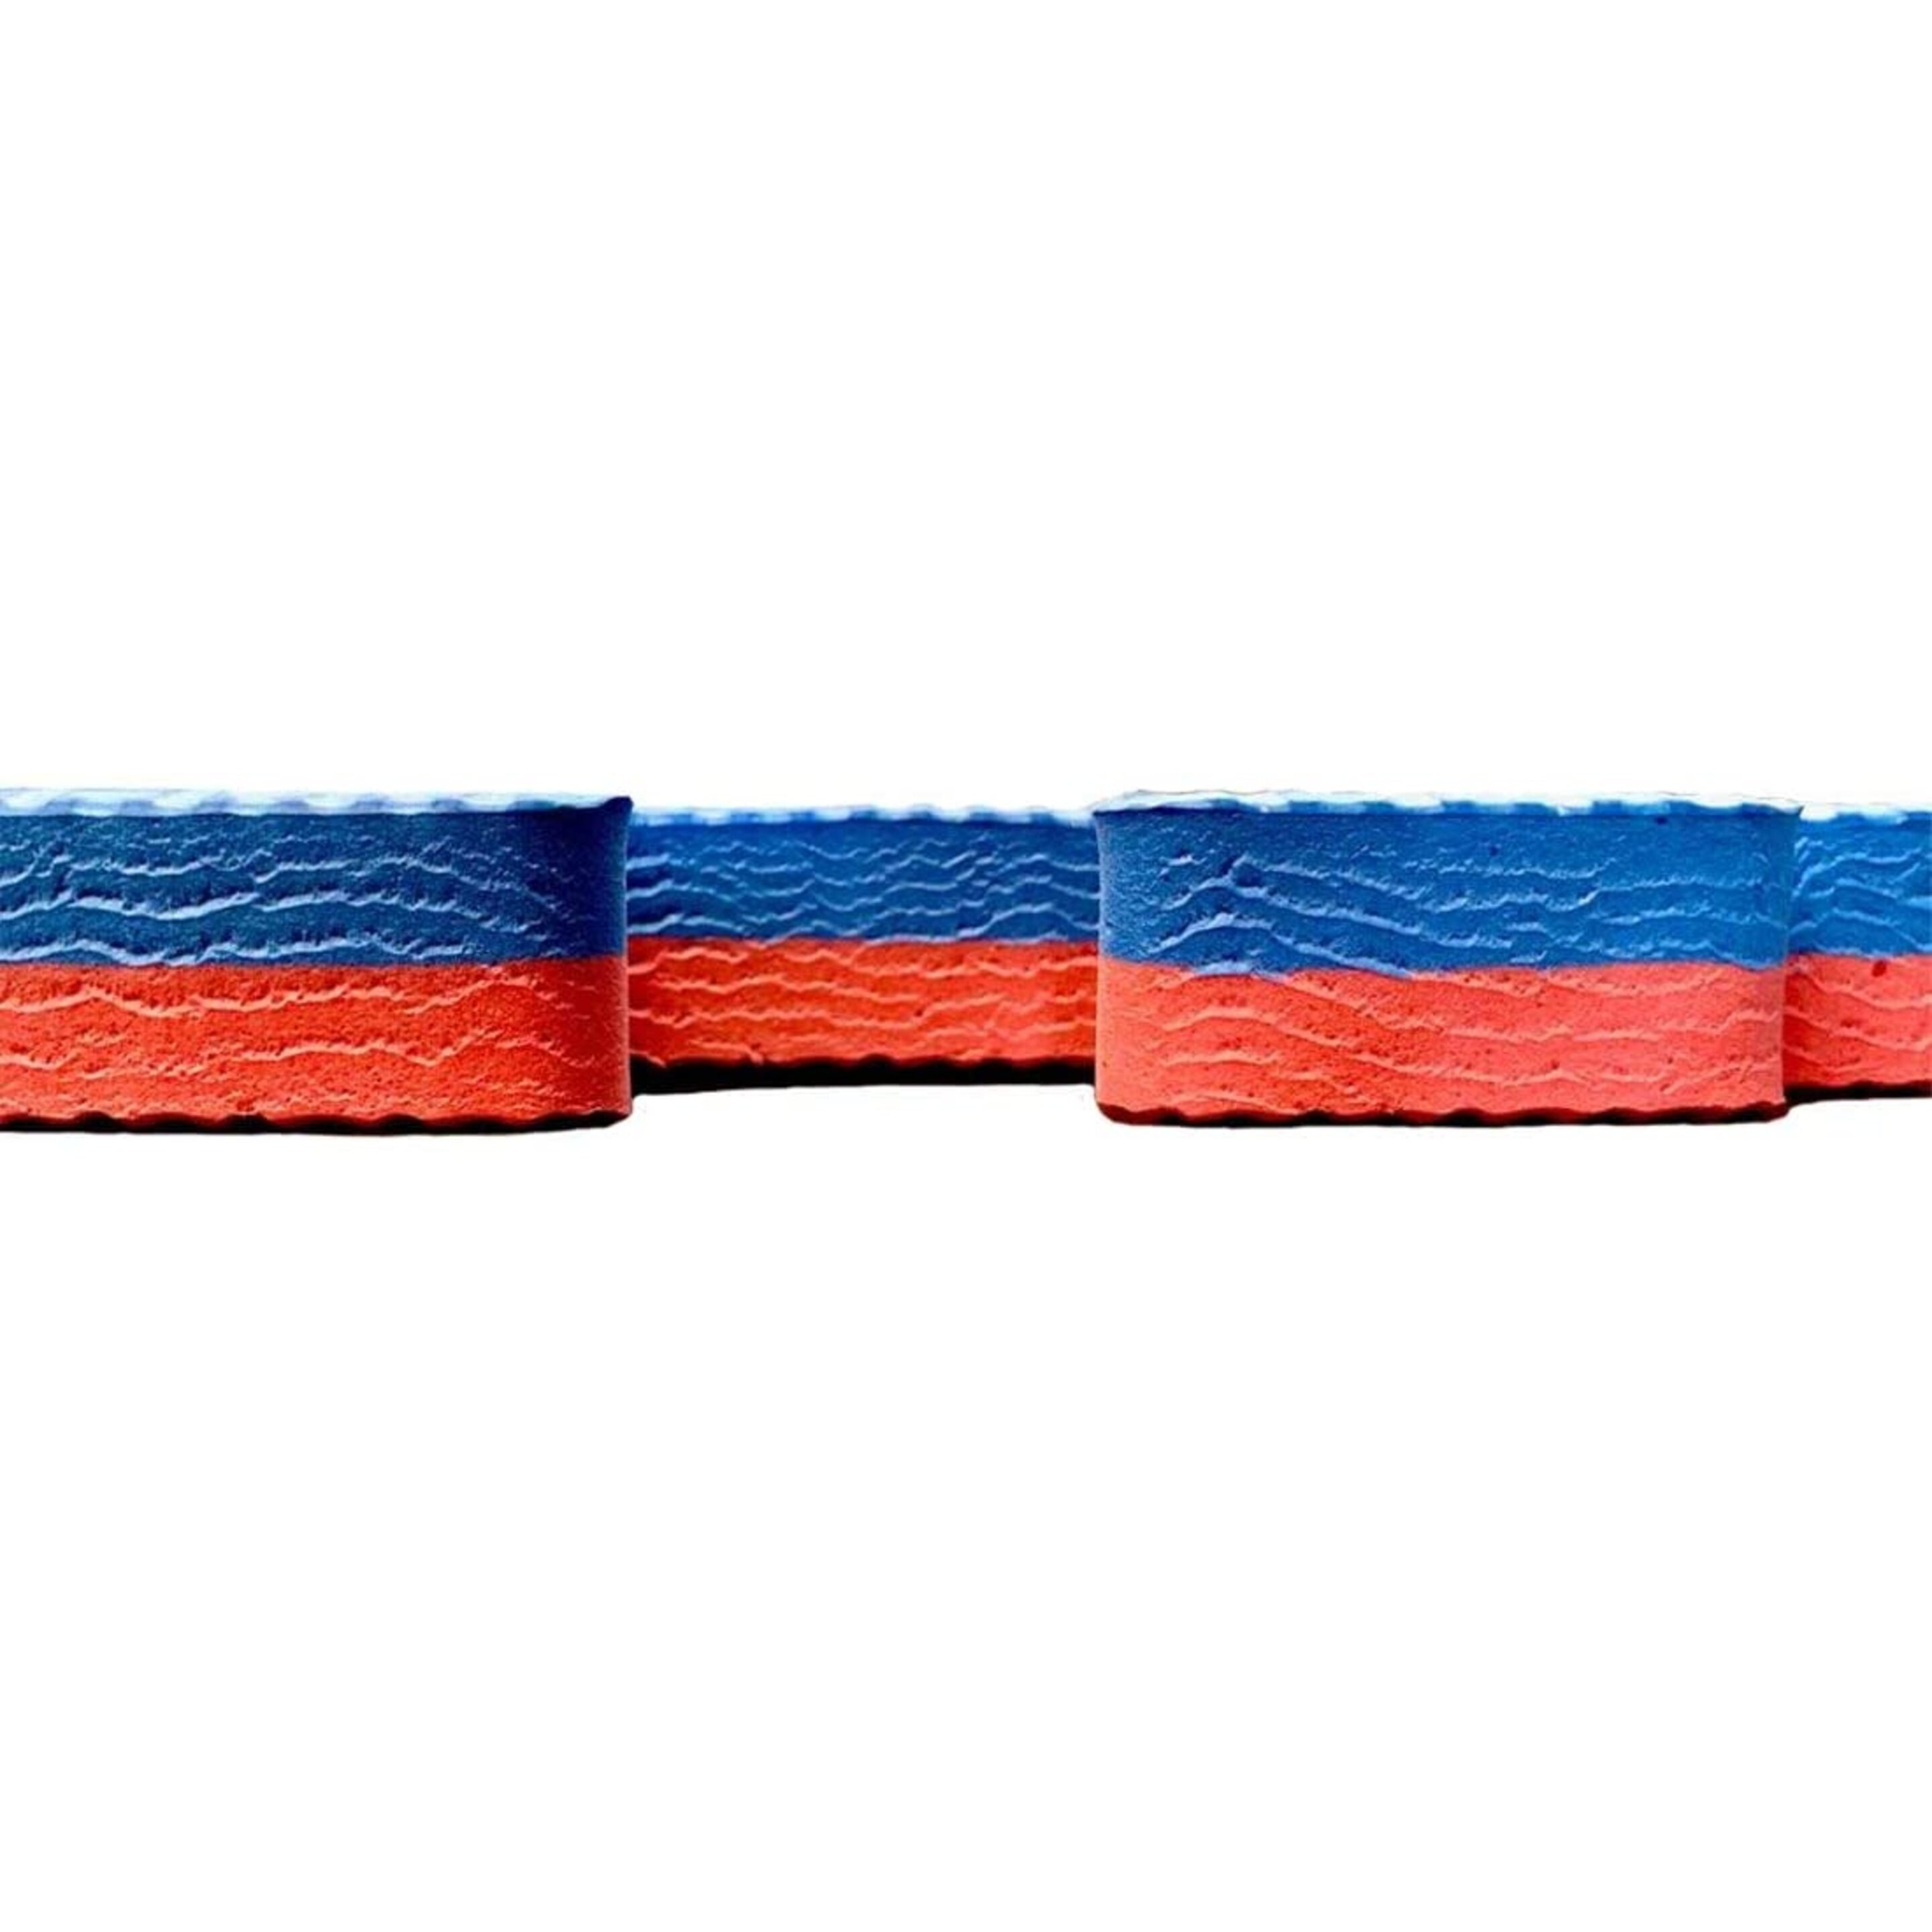 Suelo Tatami Puzzle 2,5cm Espesor 1x1 M Azul/rojo